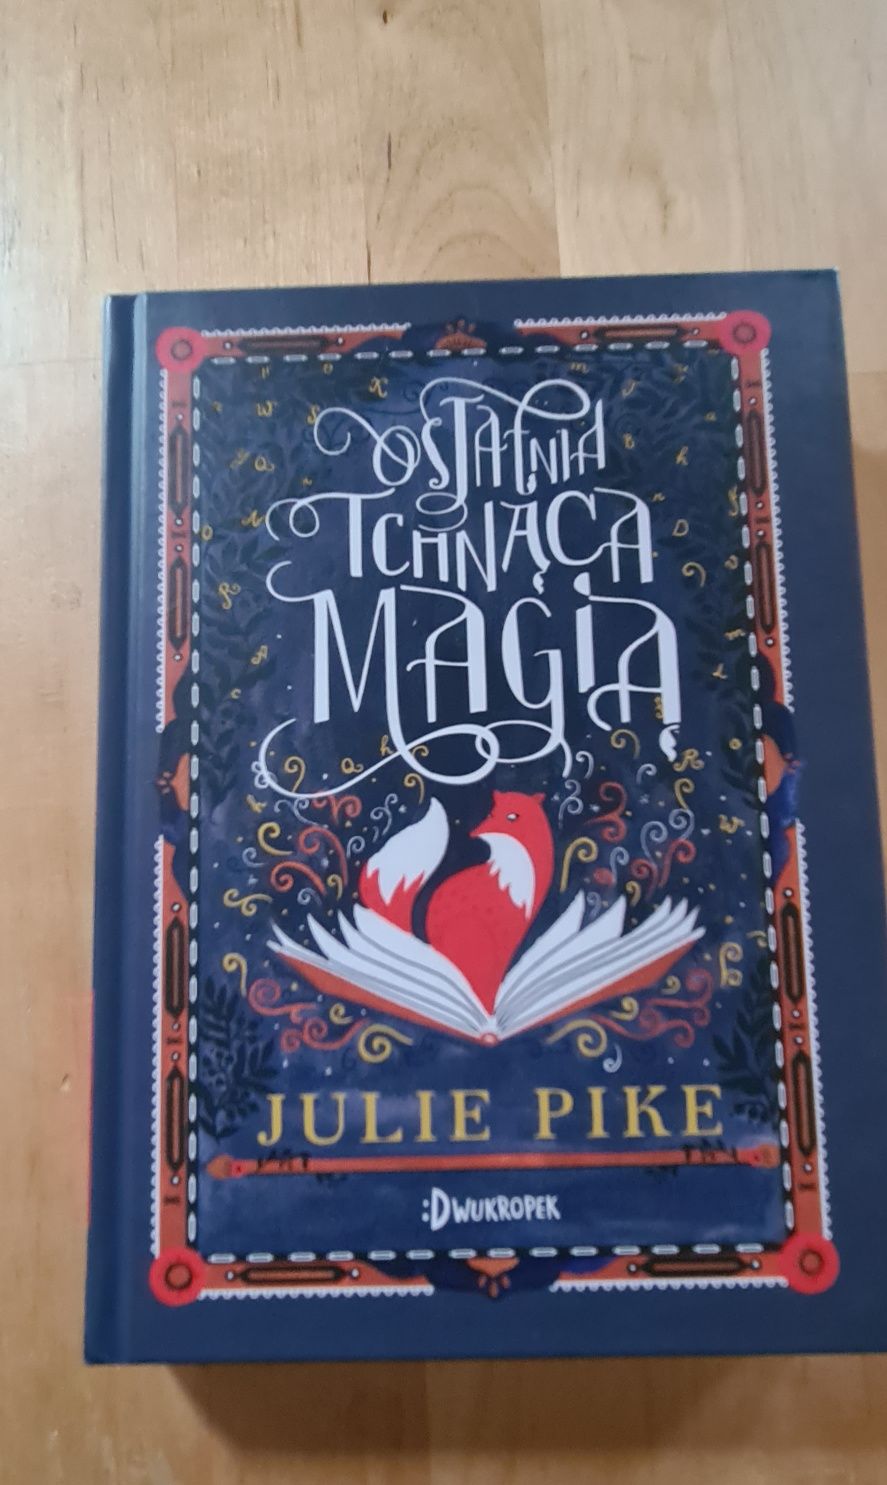 Julie Pike "Ostatnia tchnąca magią"